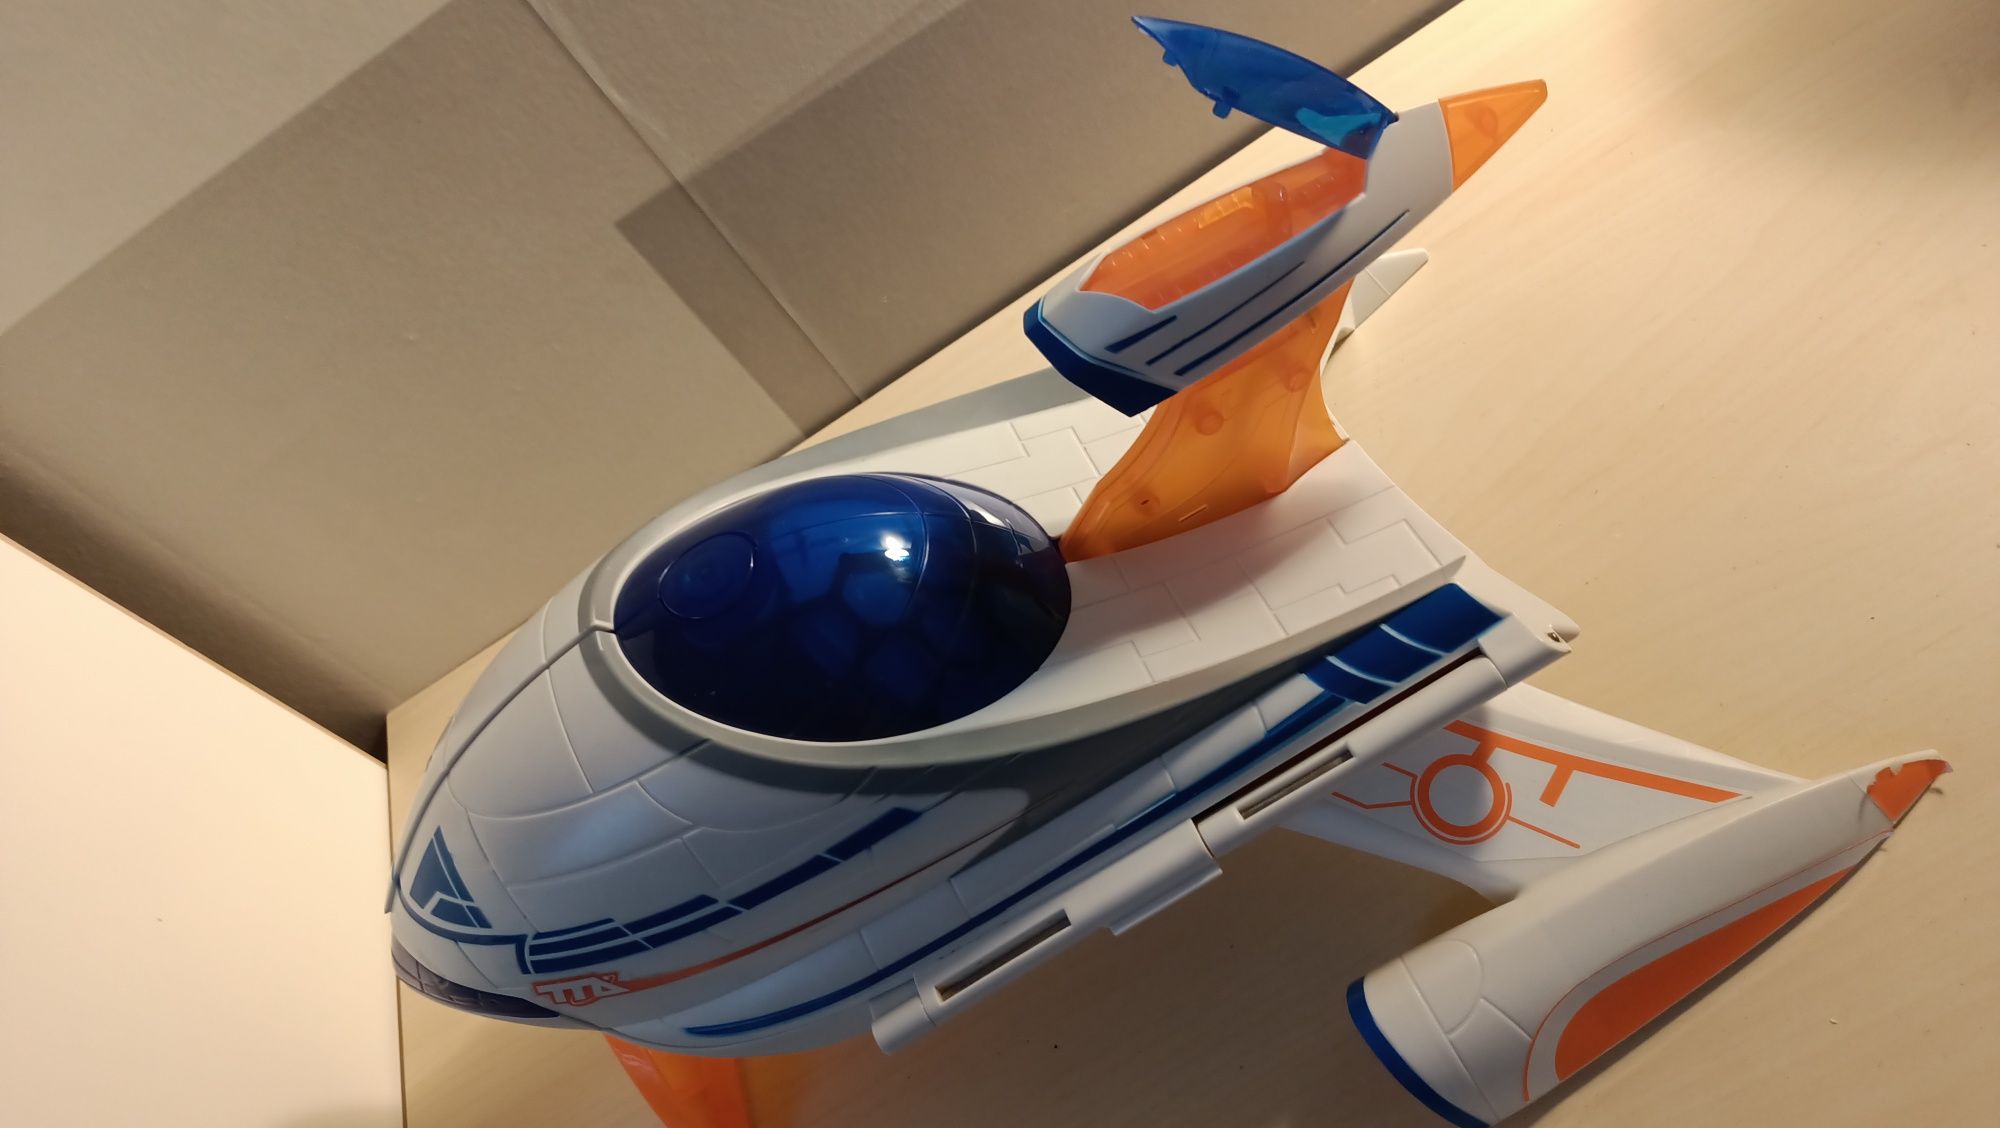 Statek kosmiczny playmobil